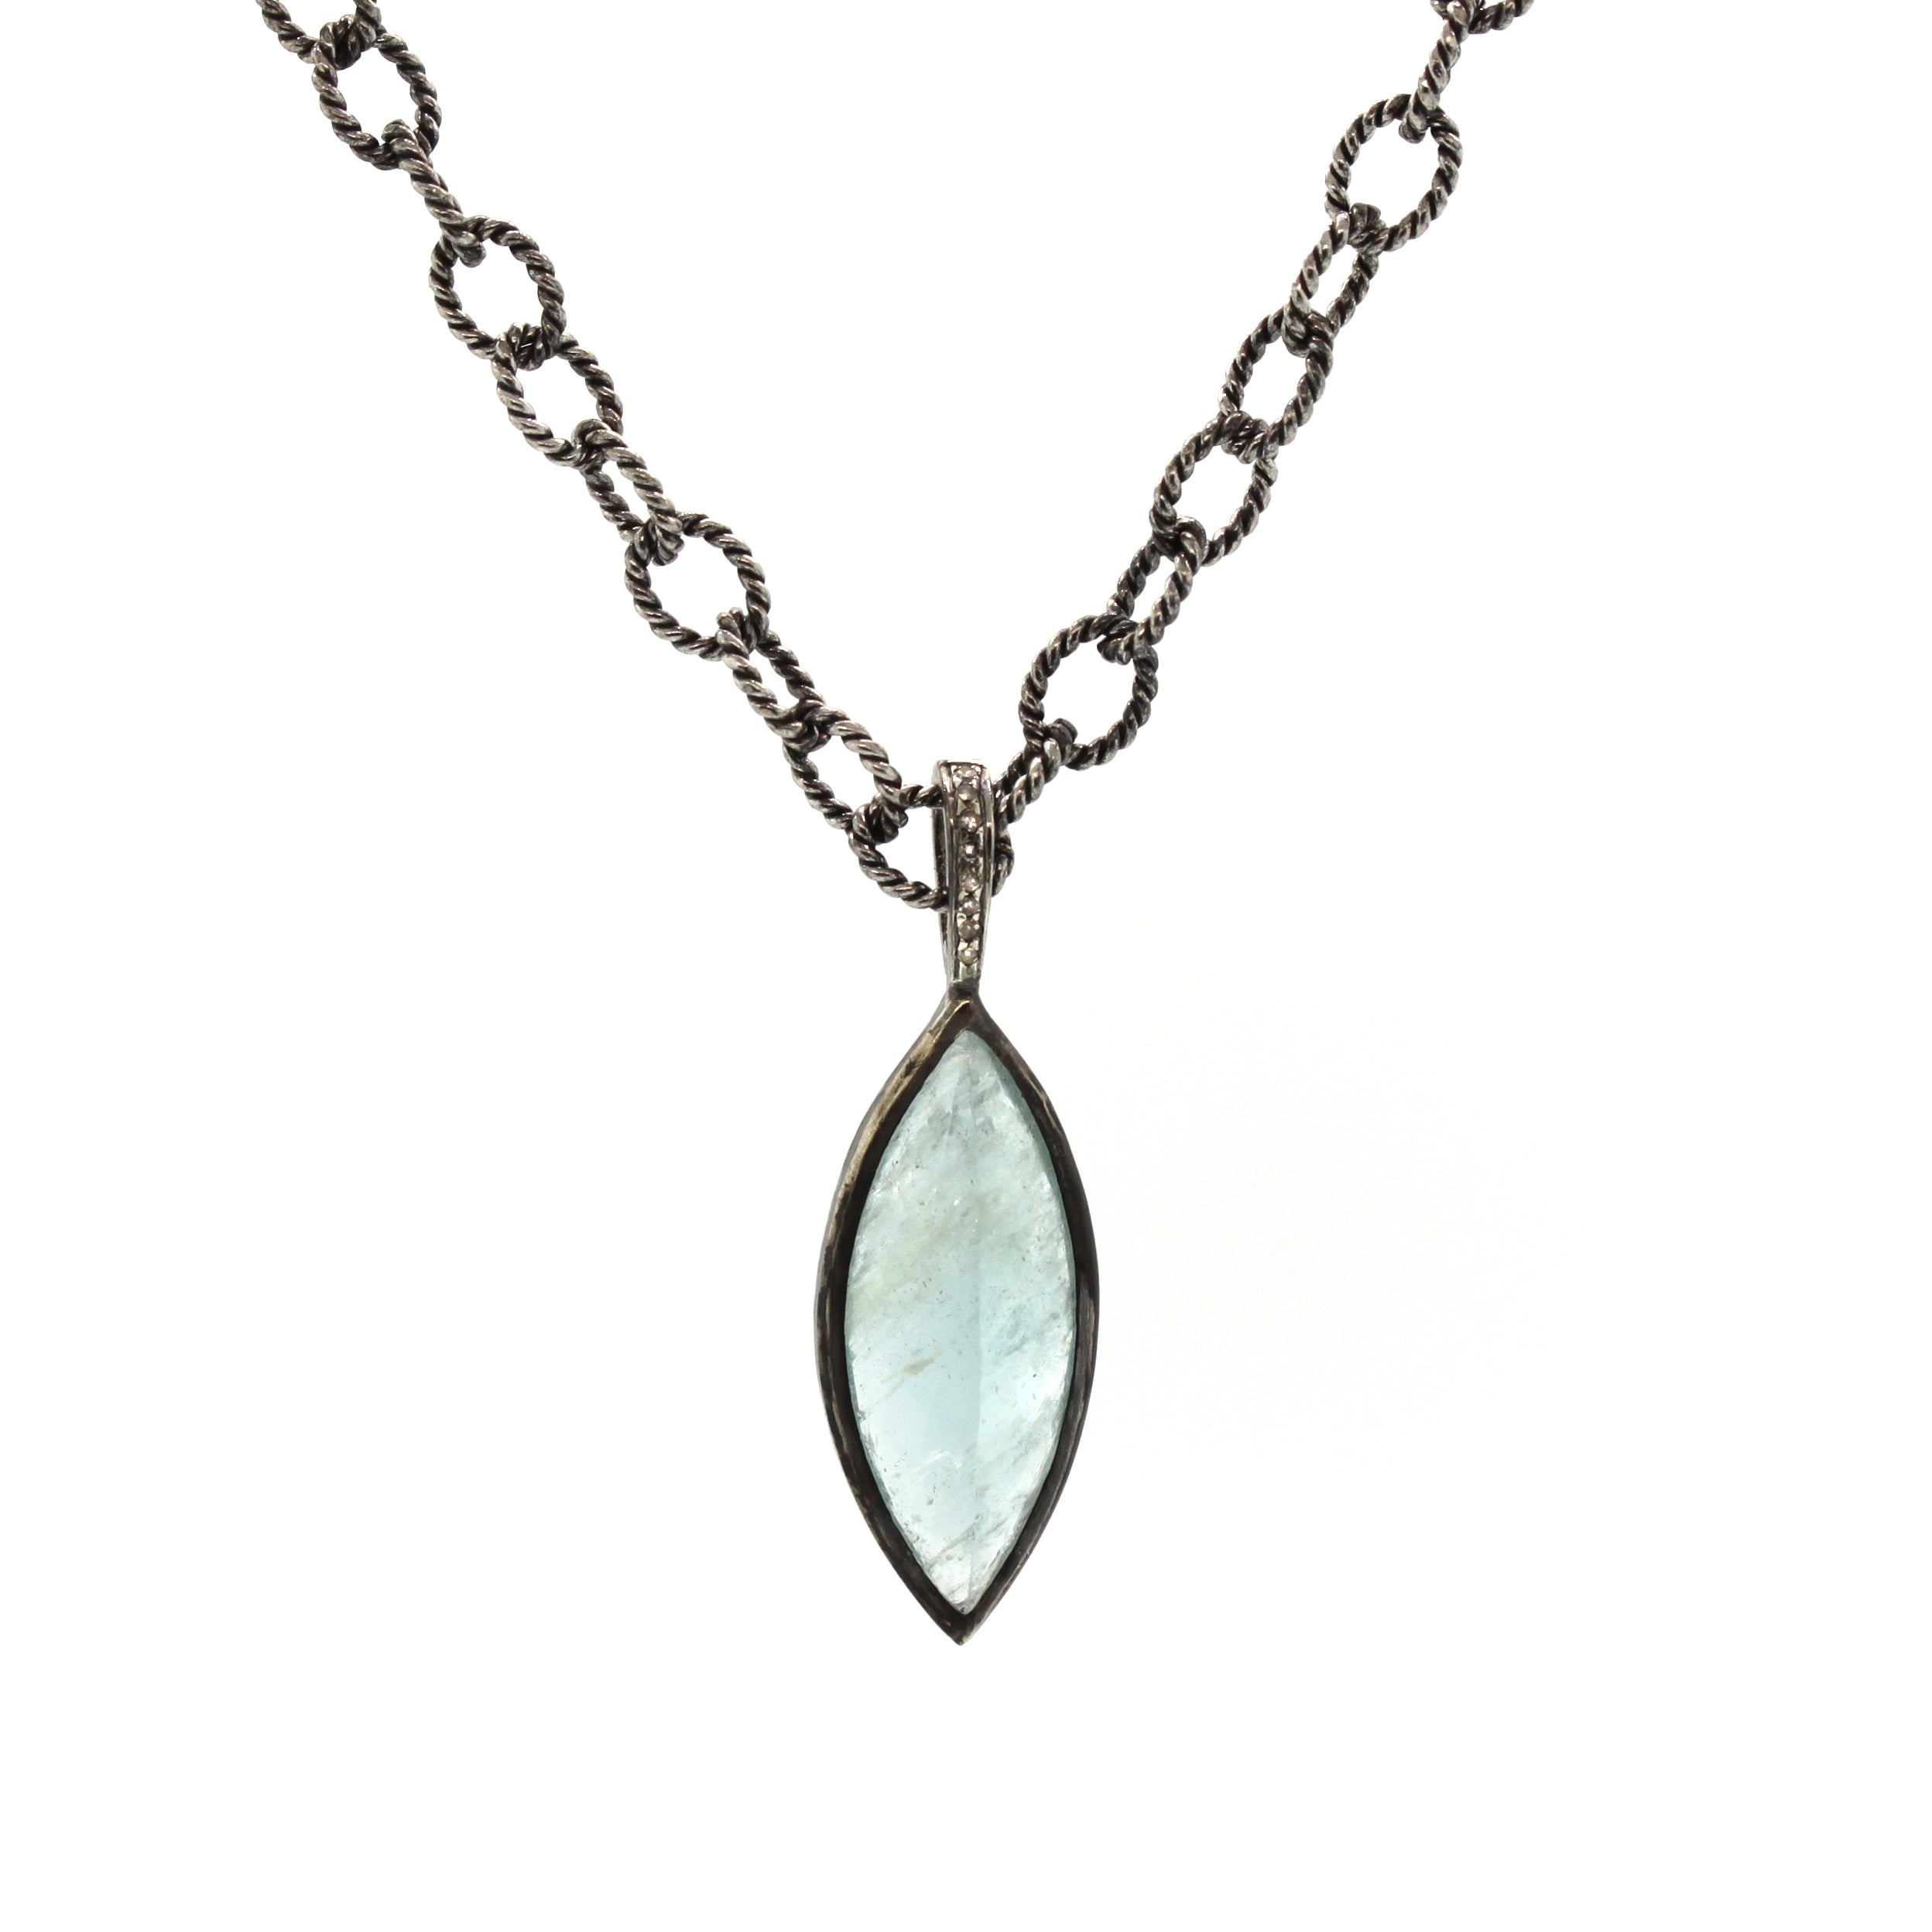 Icy Aquamarine Necklace, gemstone jewelry, rebecca lankford designs, houston, tx